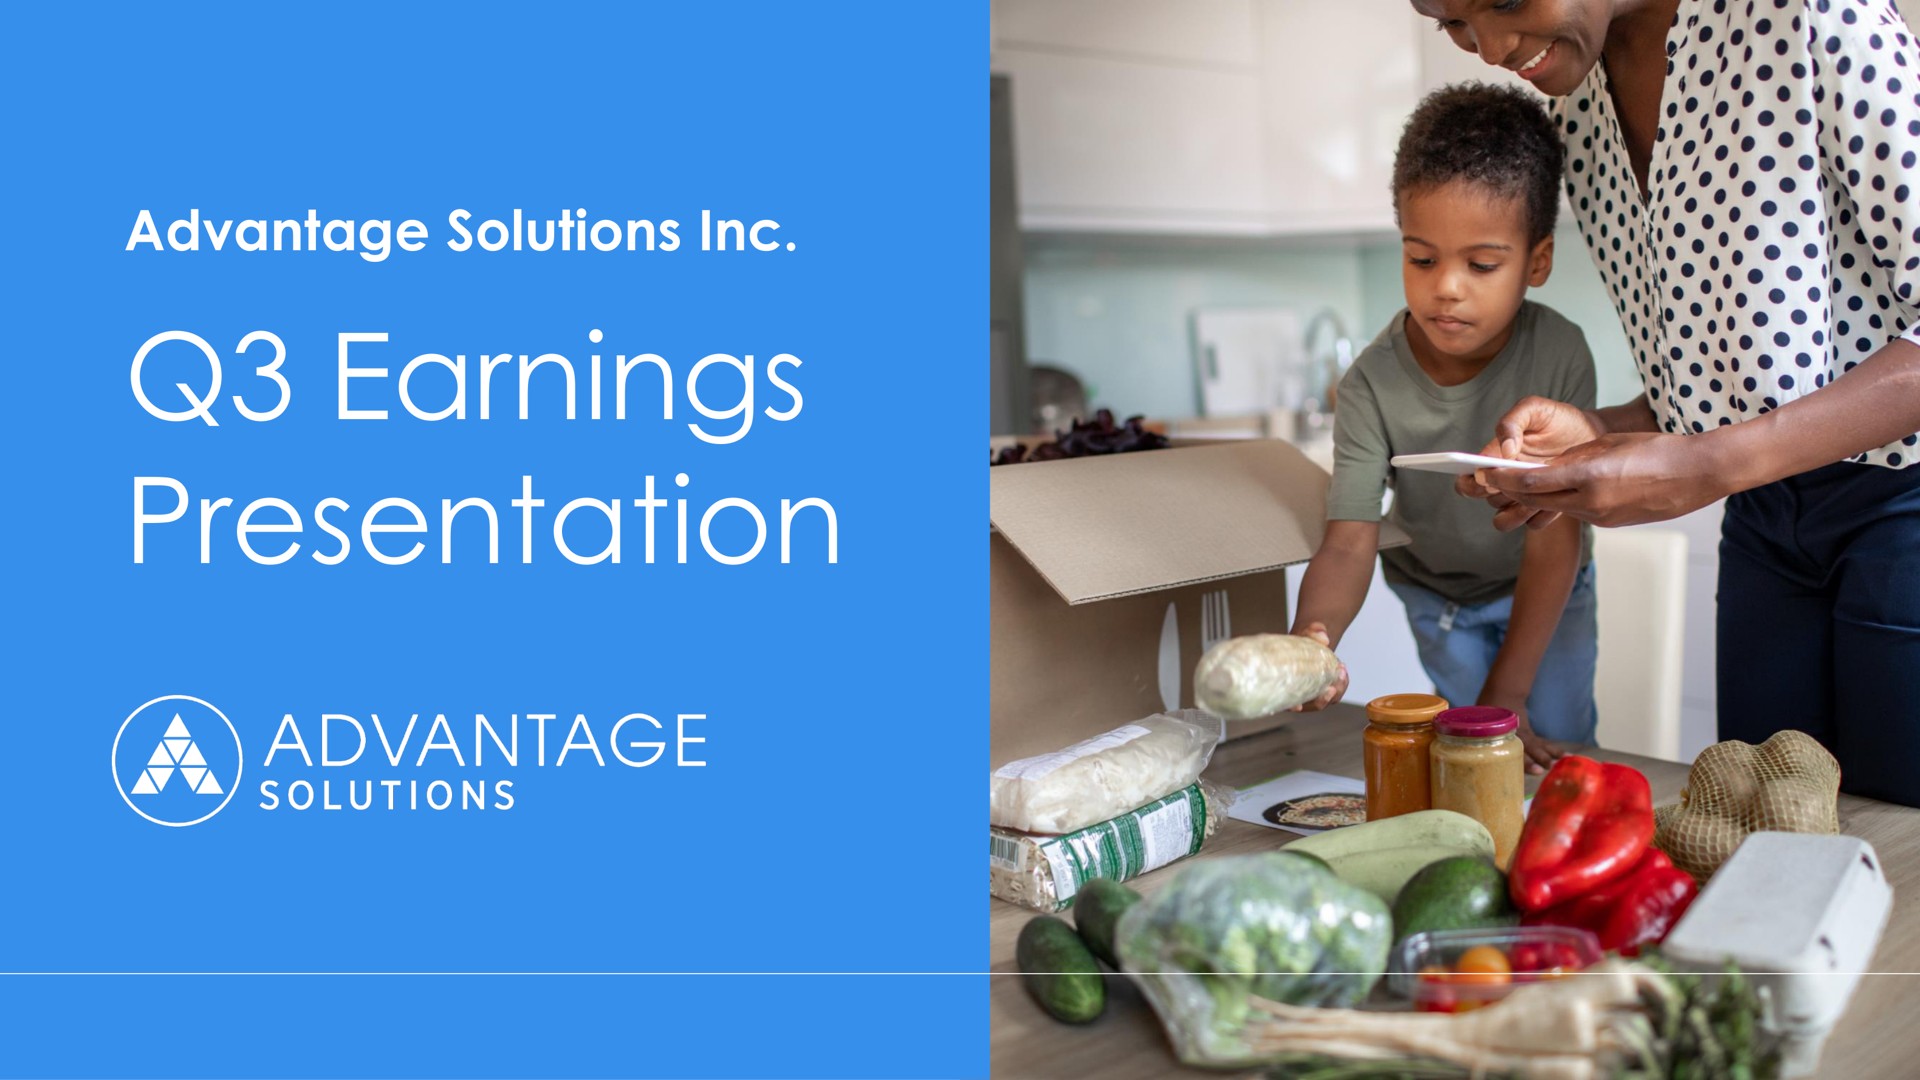 advantage solutions earnings presentation | Advantage Solutions